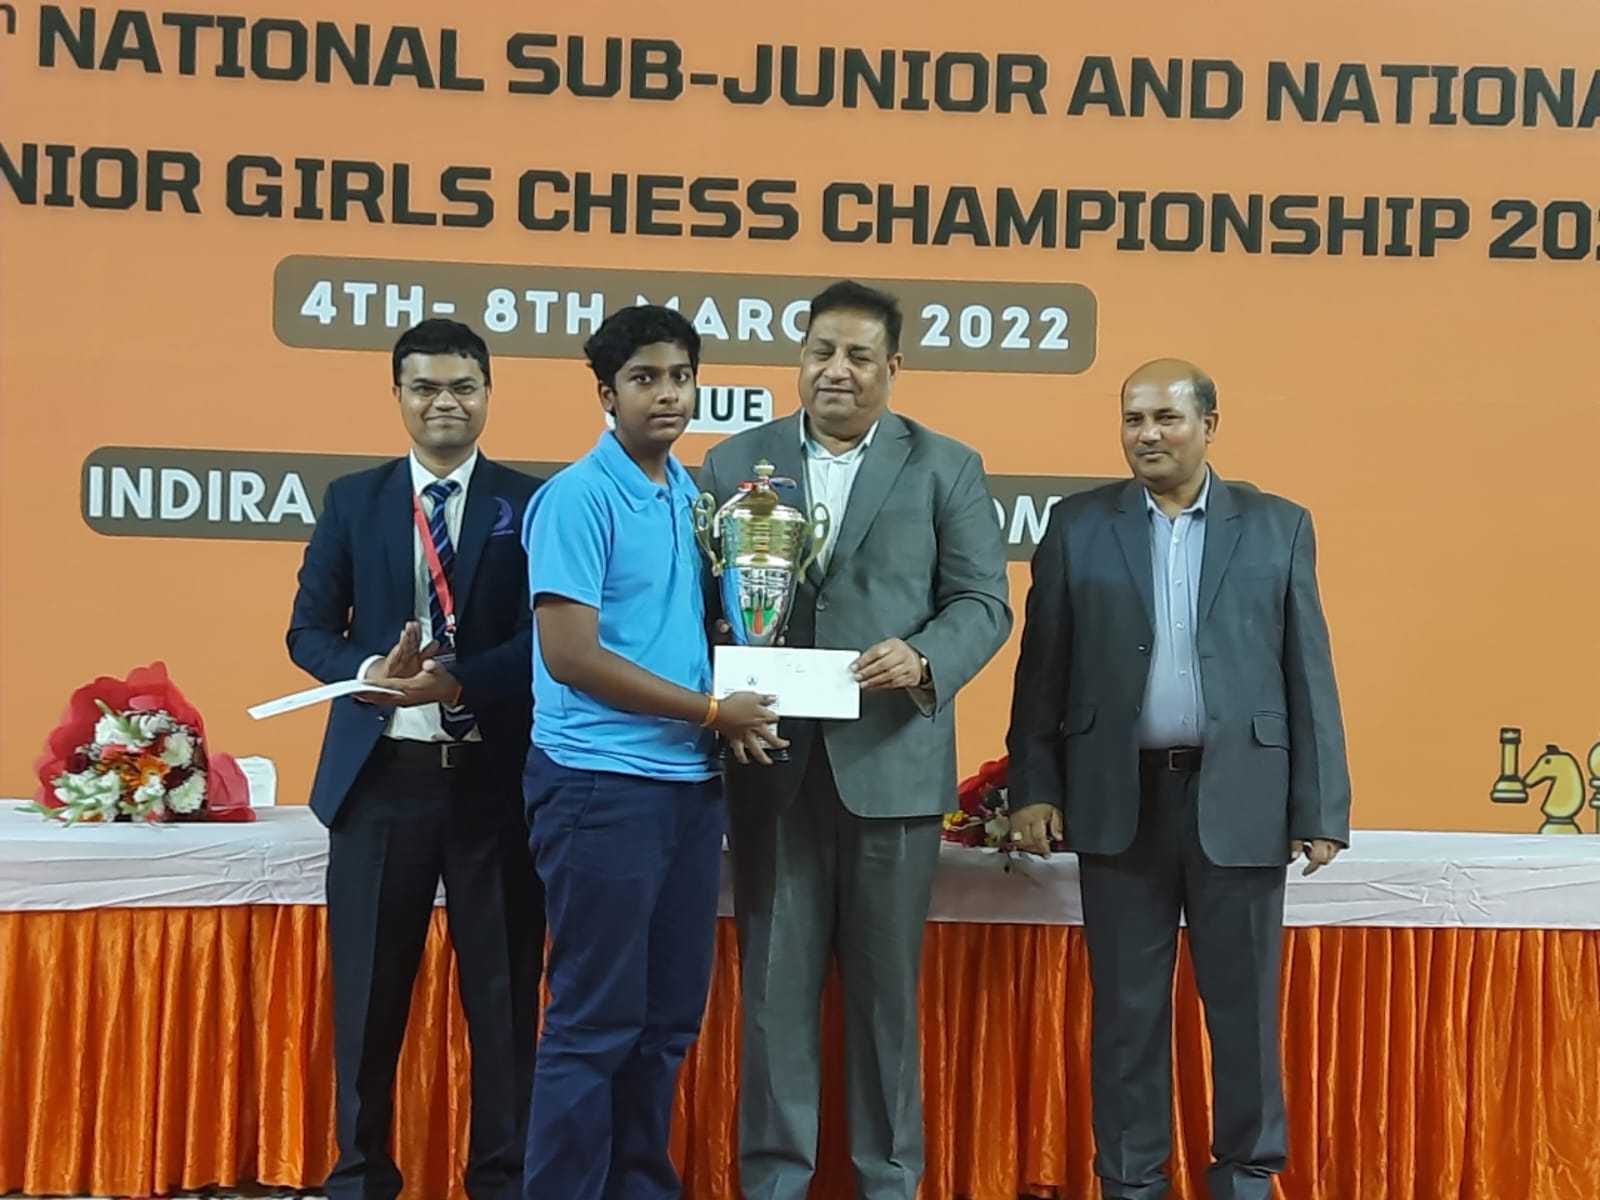 Pranav V won a gold at the World Youth Chess Olympiad